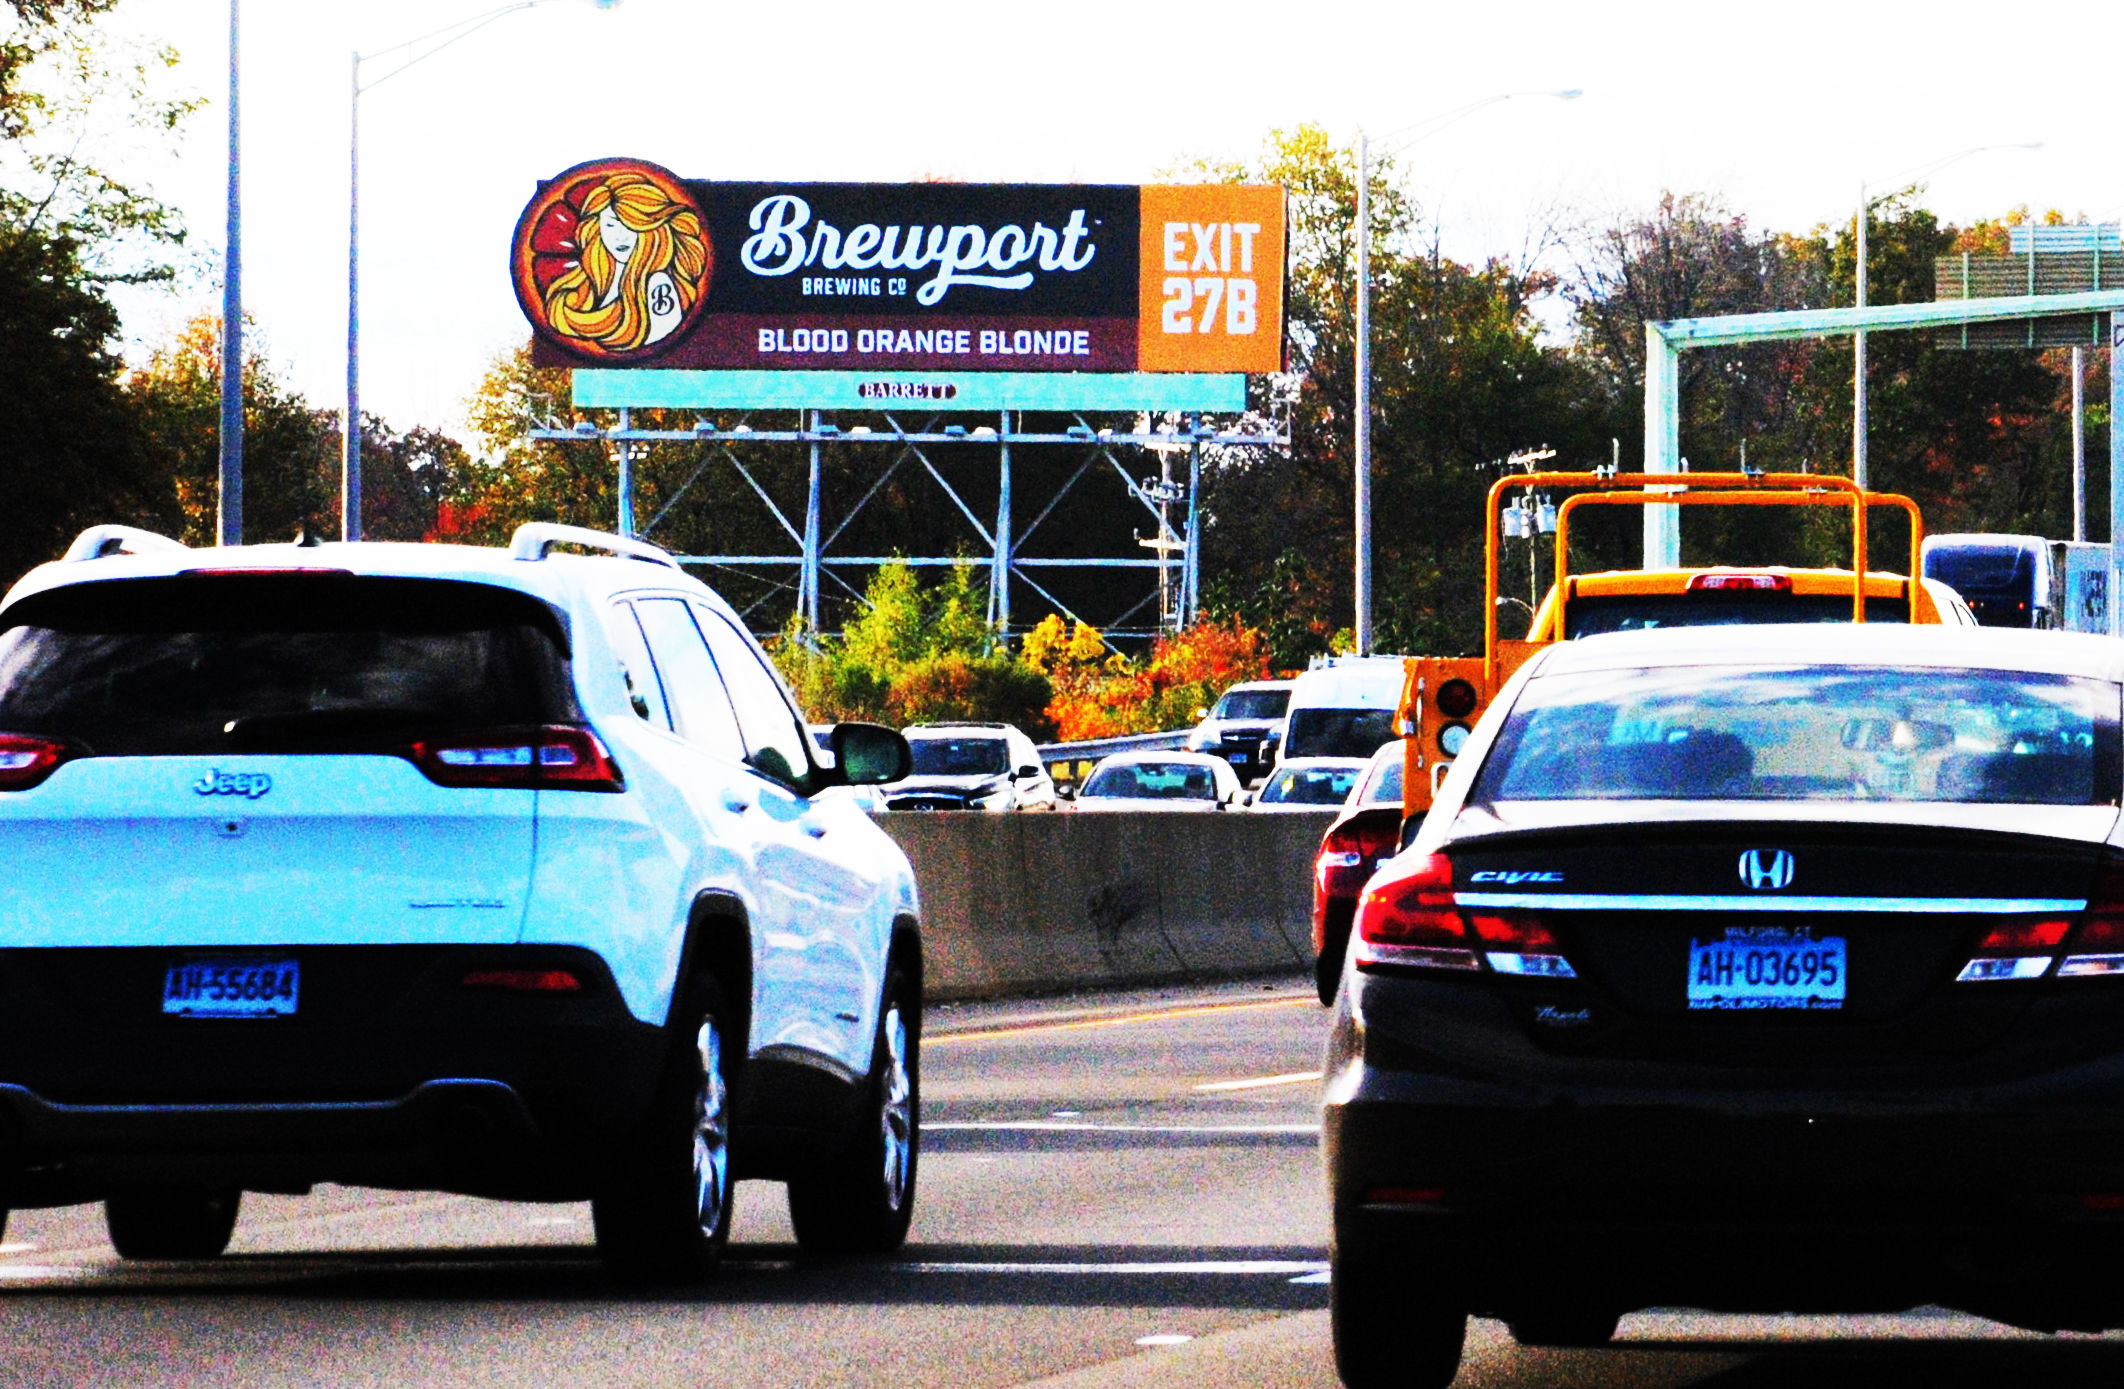 Billboard image of Brewport